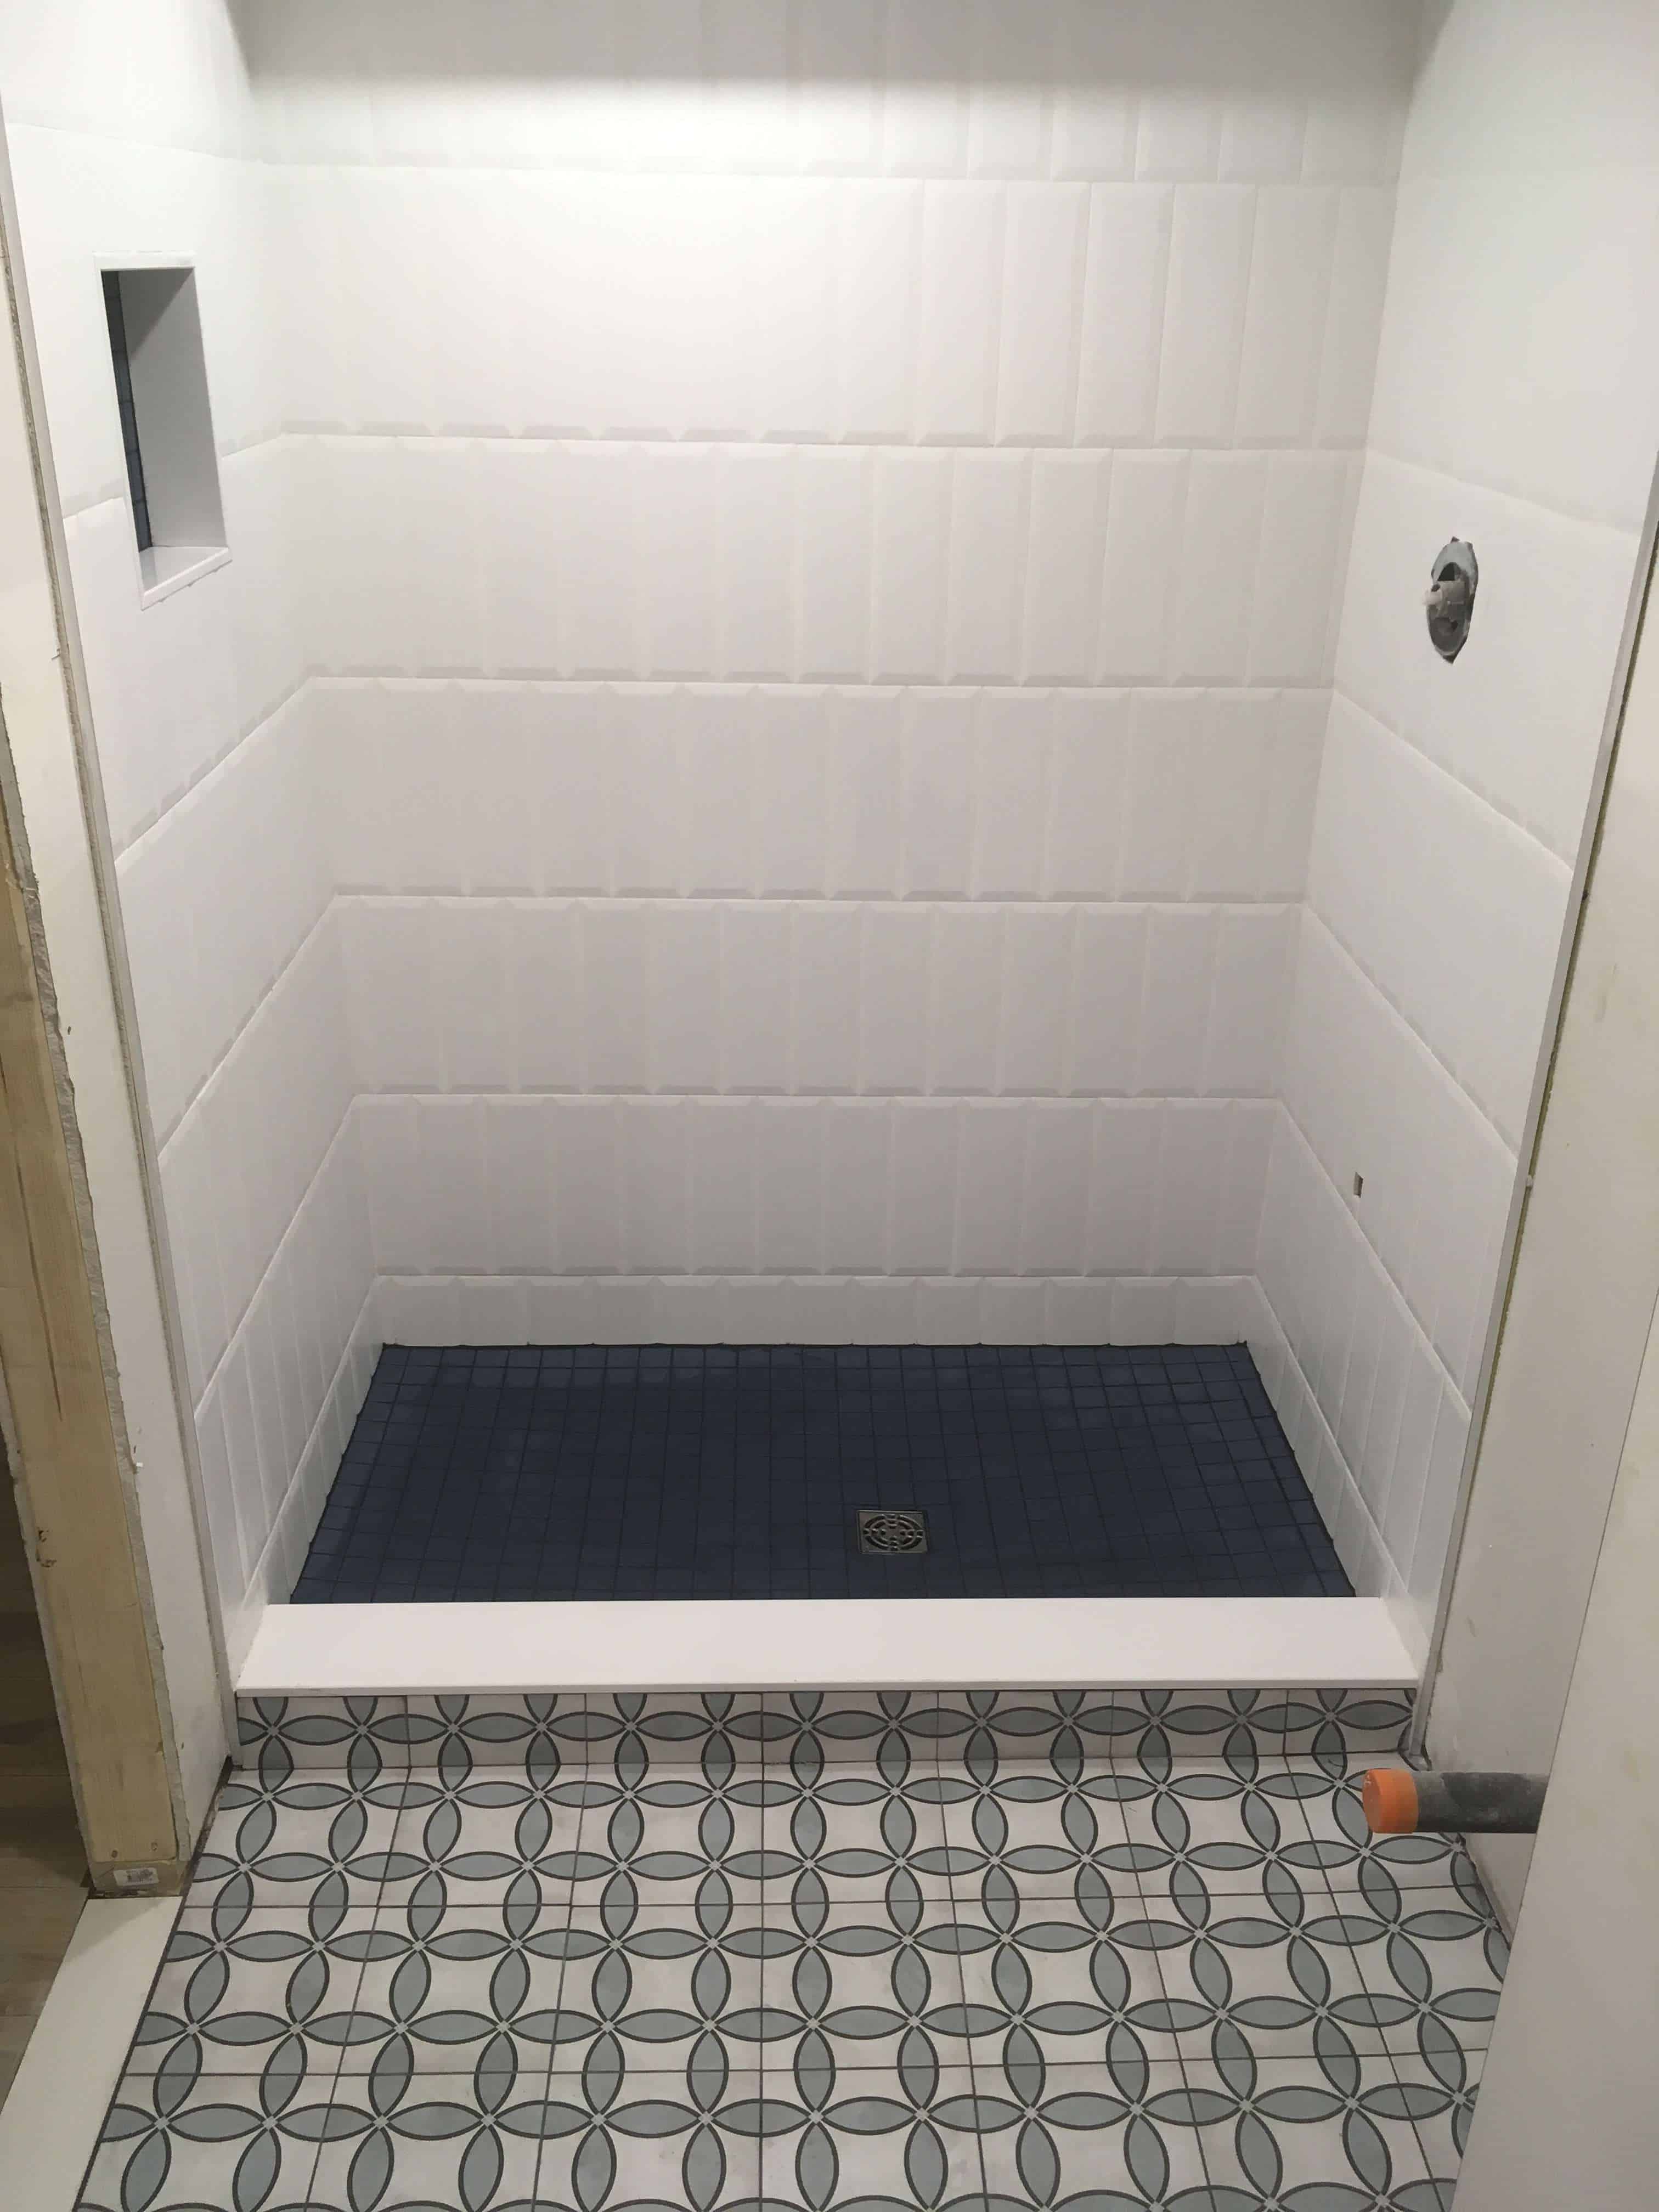 Top 5 Tile Design Ideas For Your Shower Floor Tile | Canadian Tile Pro